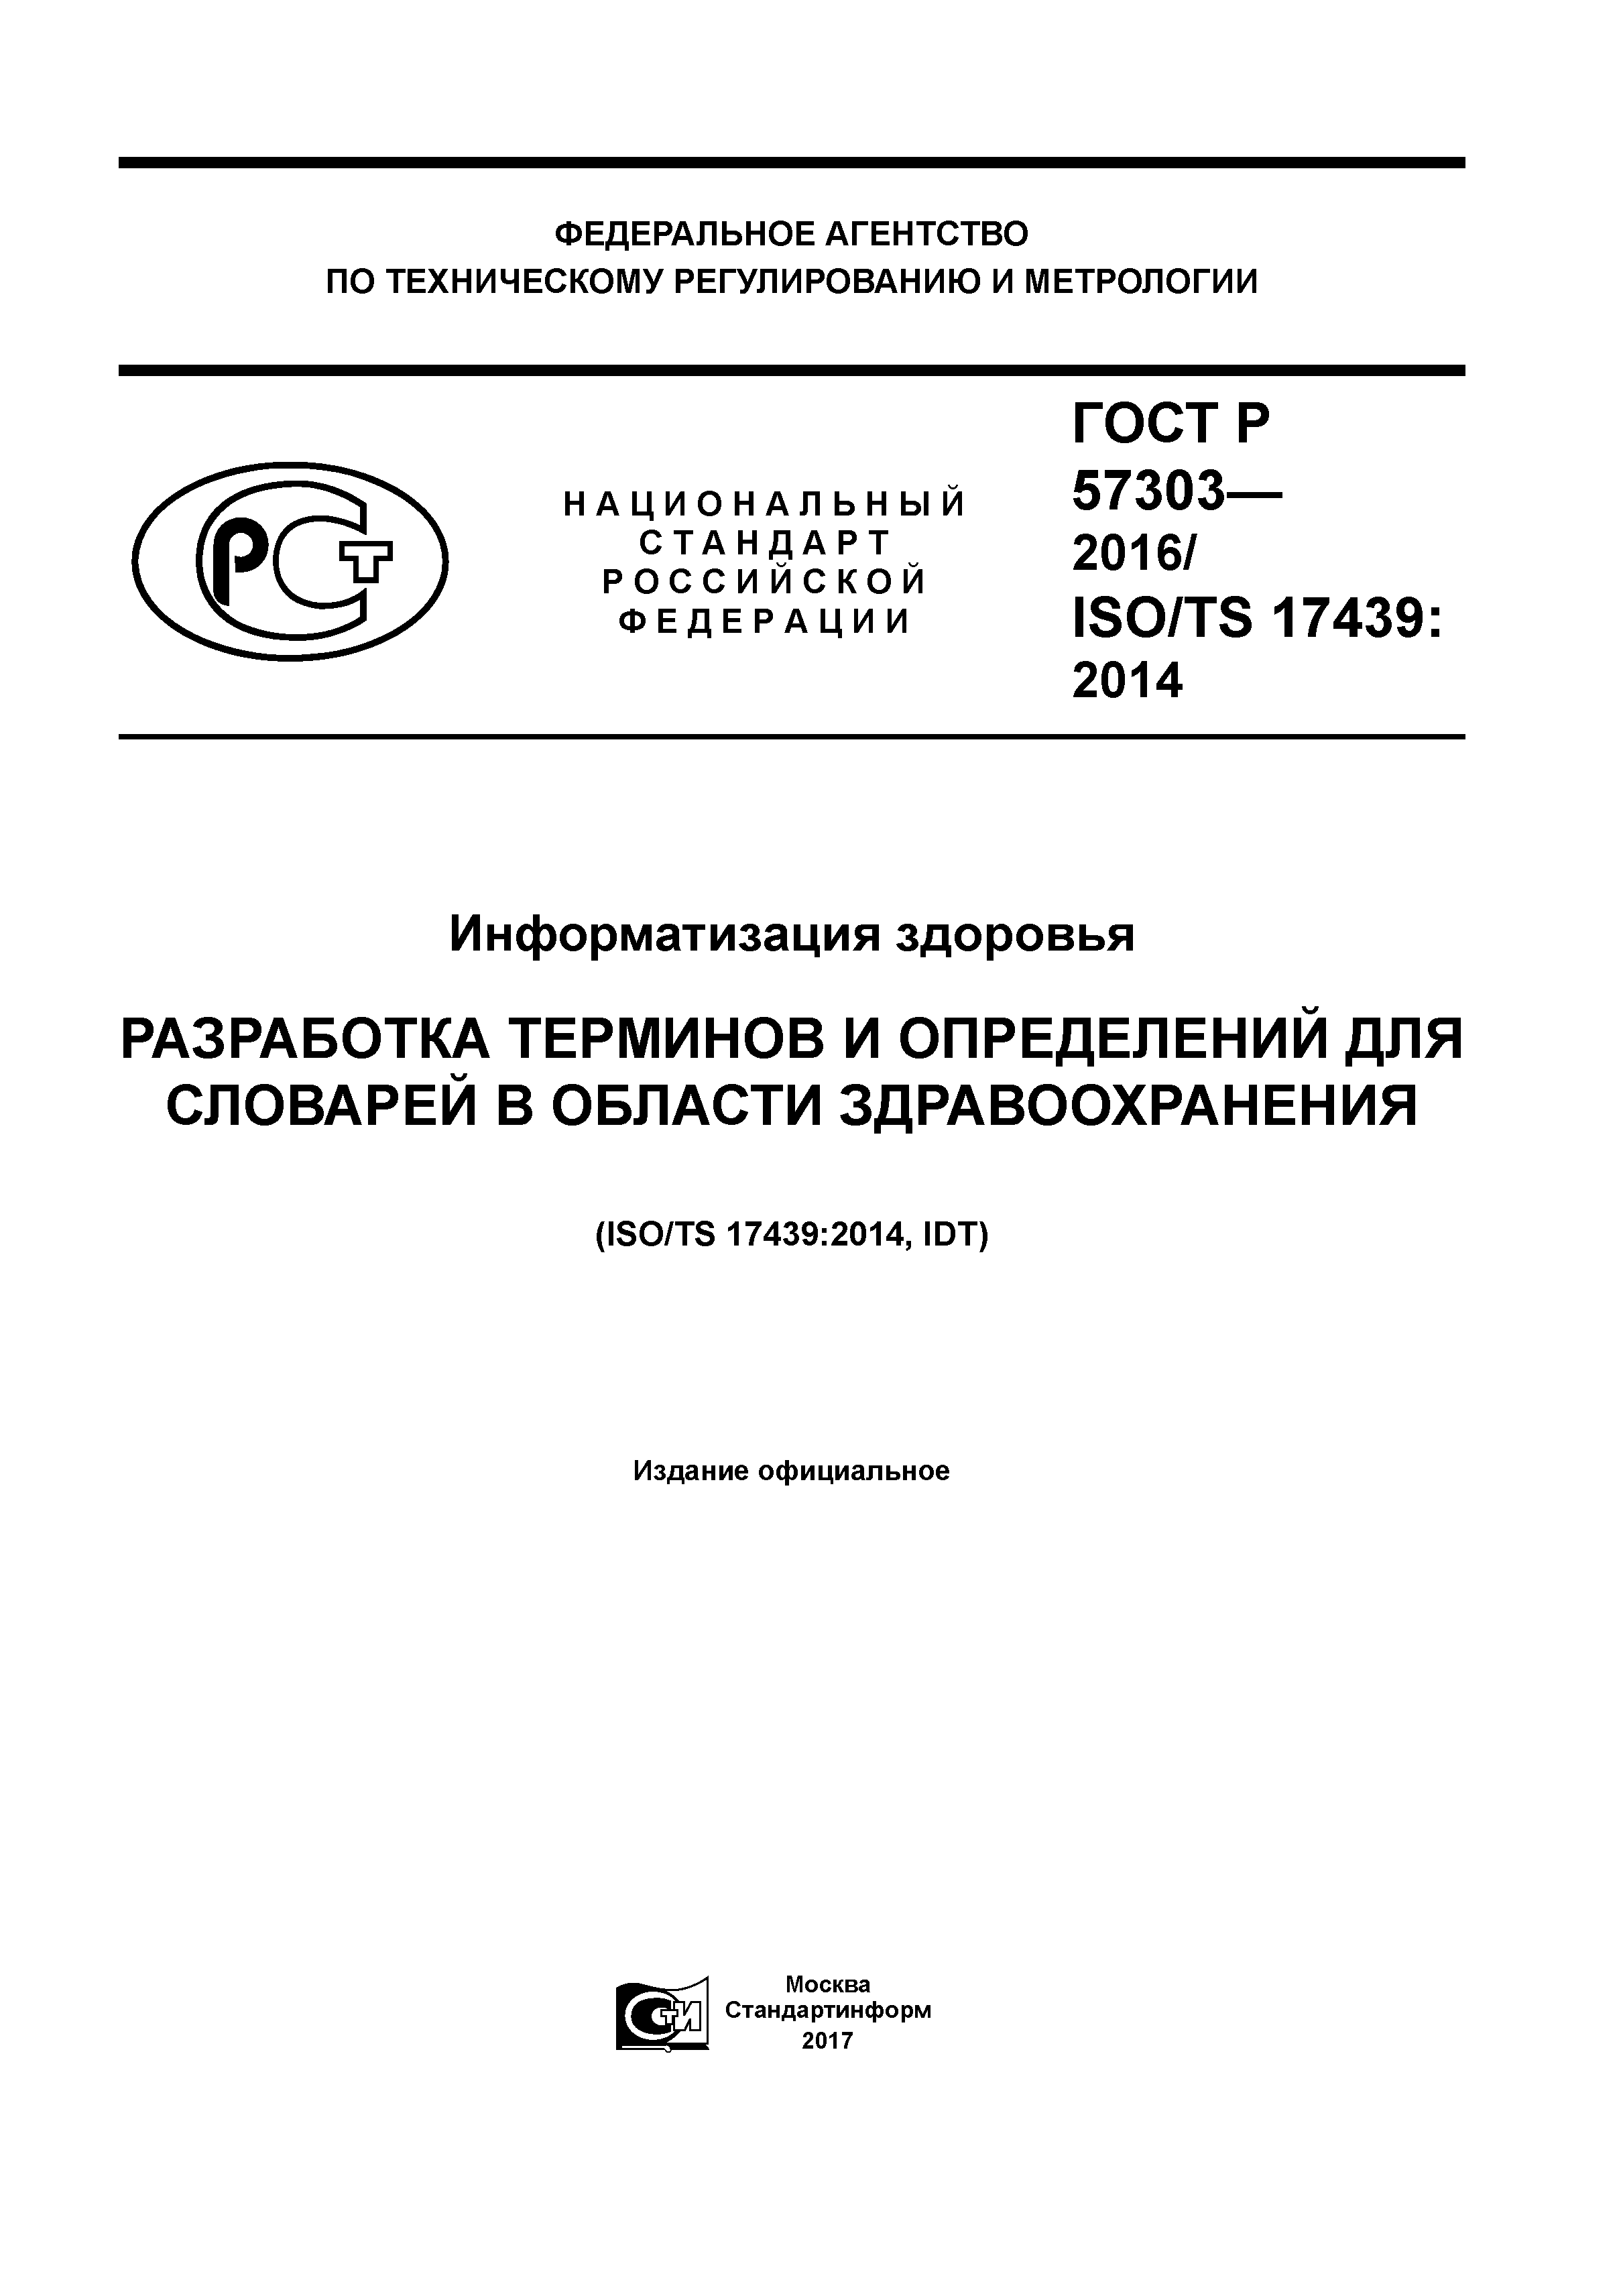 ГОСТ Р 57303-2016